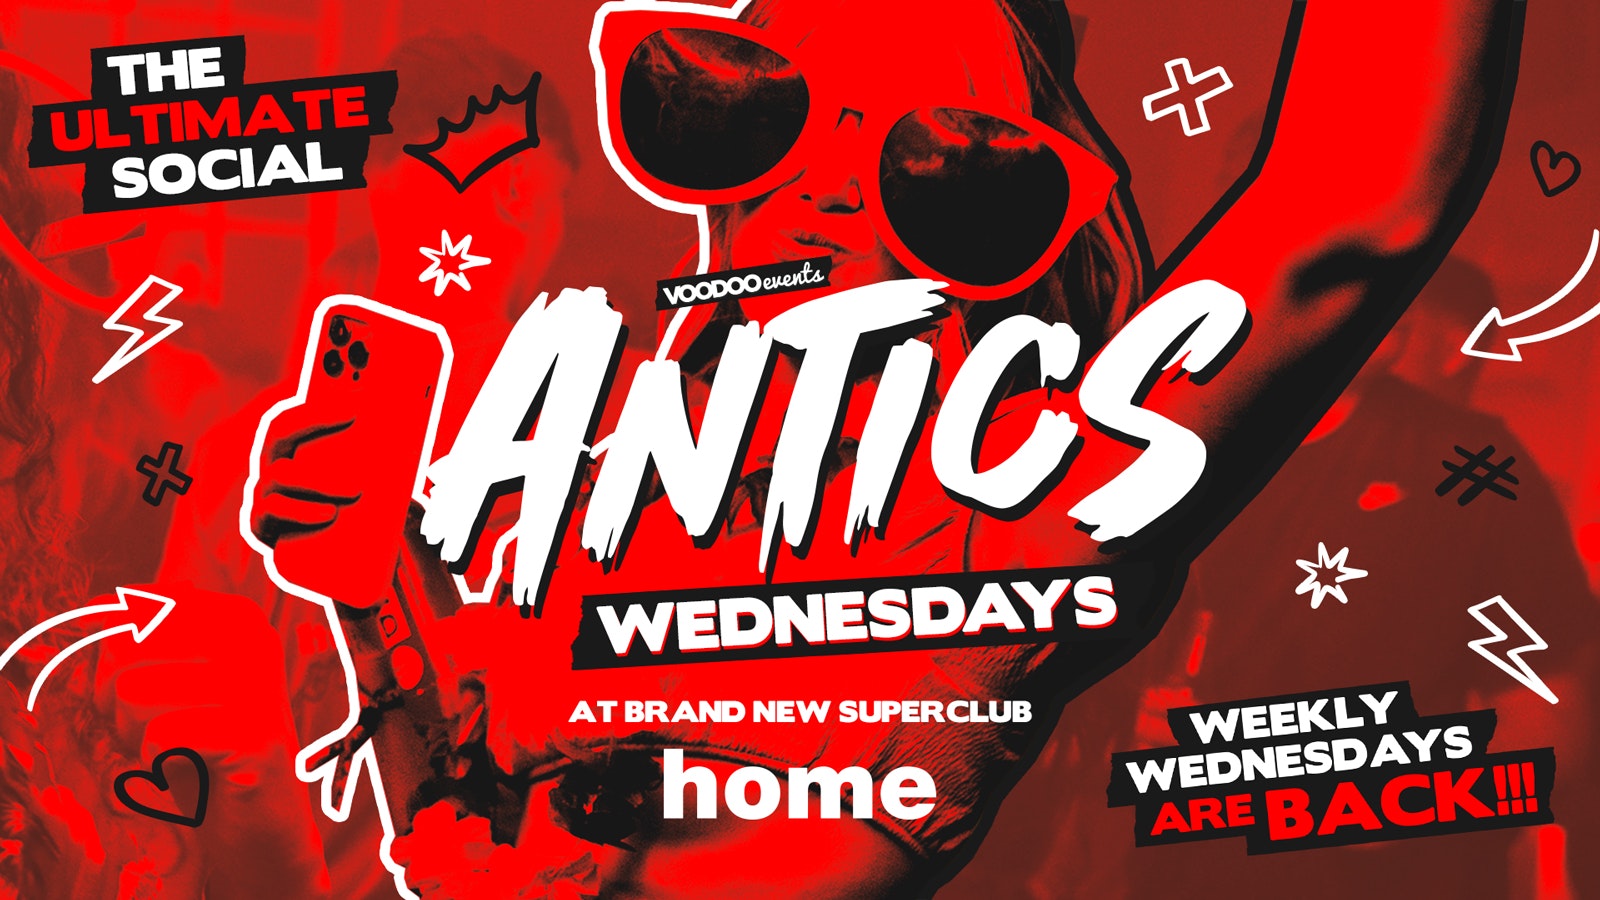 Antics @ THE BRAND NEW SUPER CLUB HOME – Wednesday 5th June